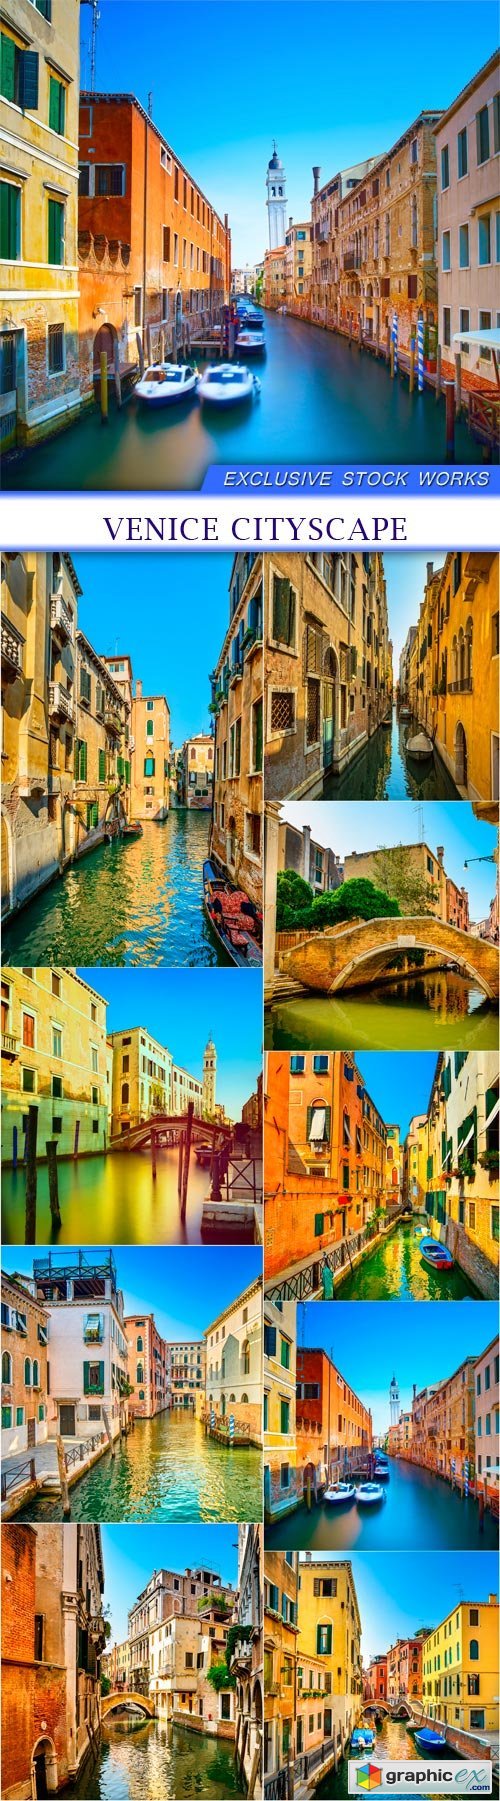 Venice cityscape 9X JPEG